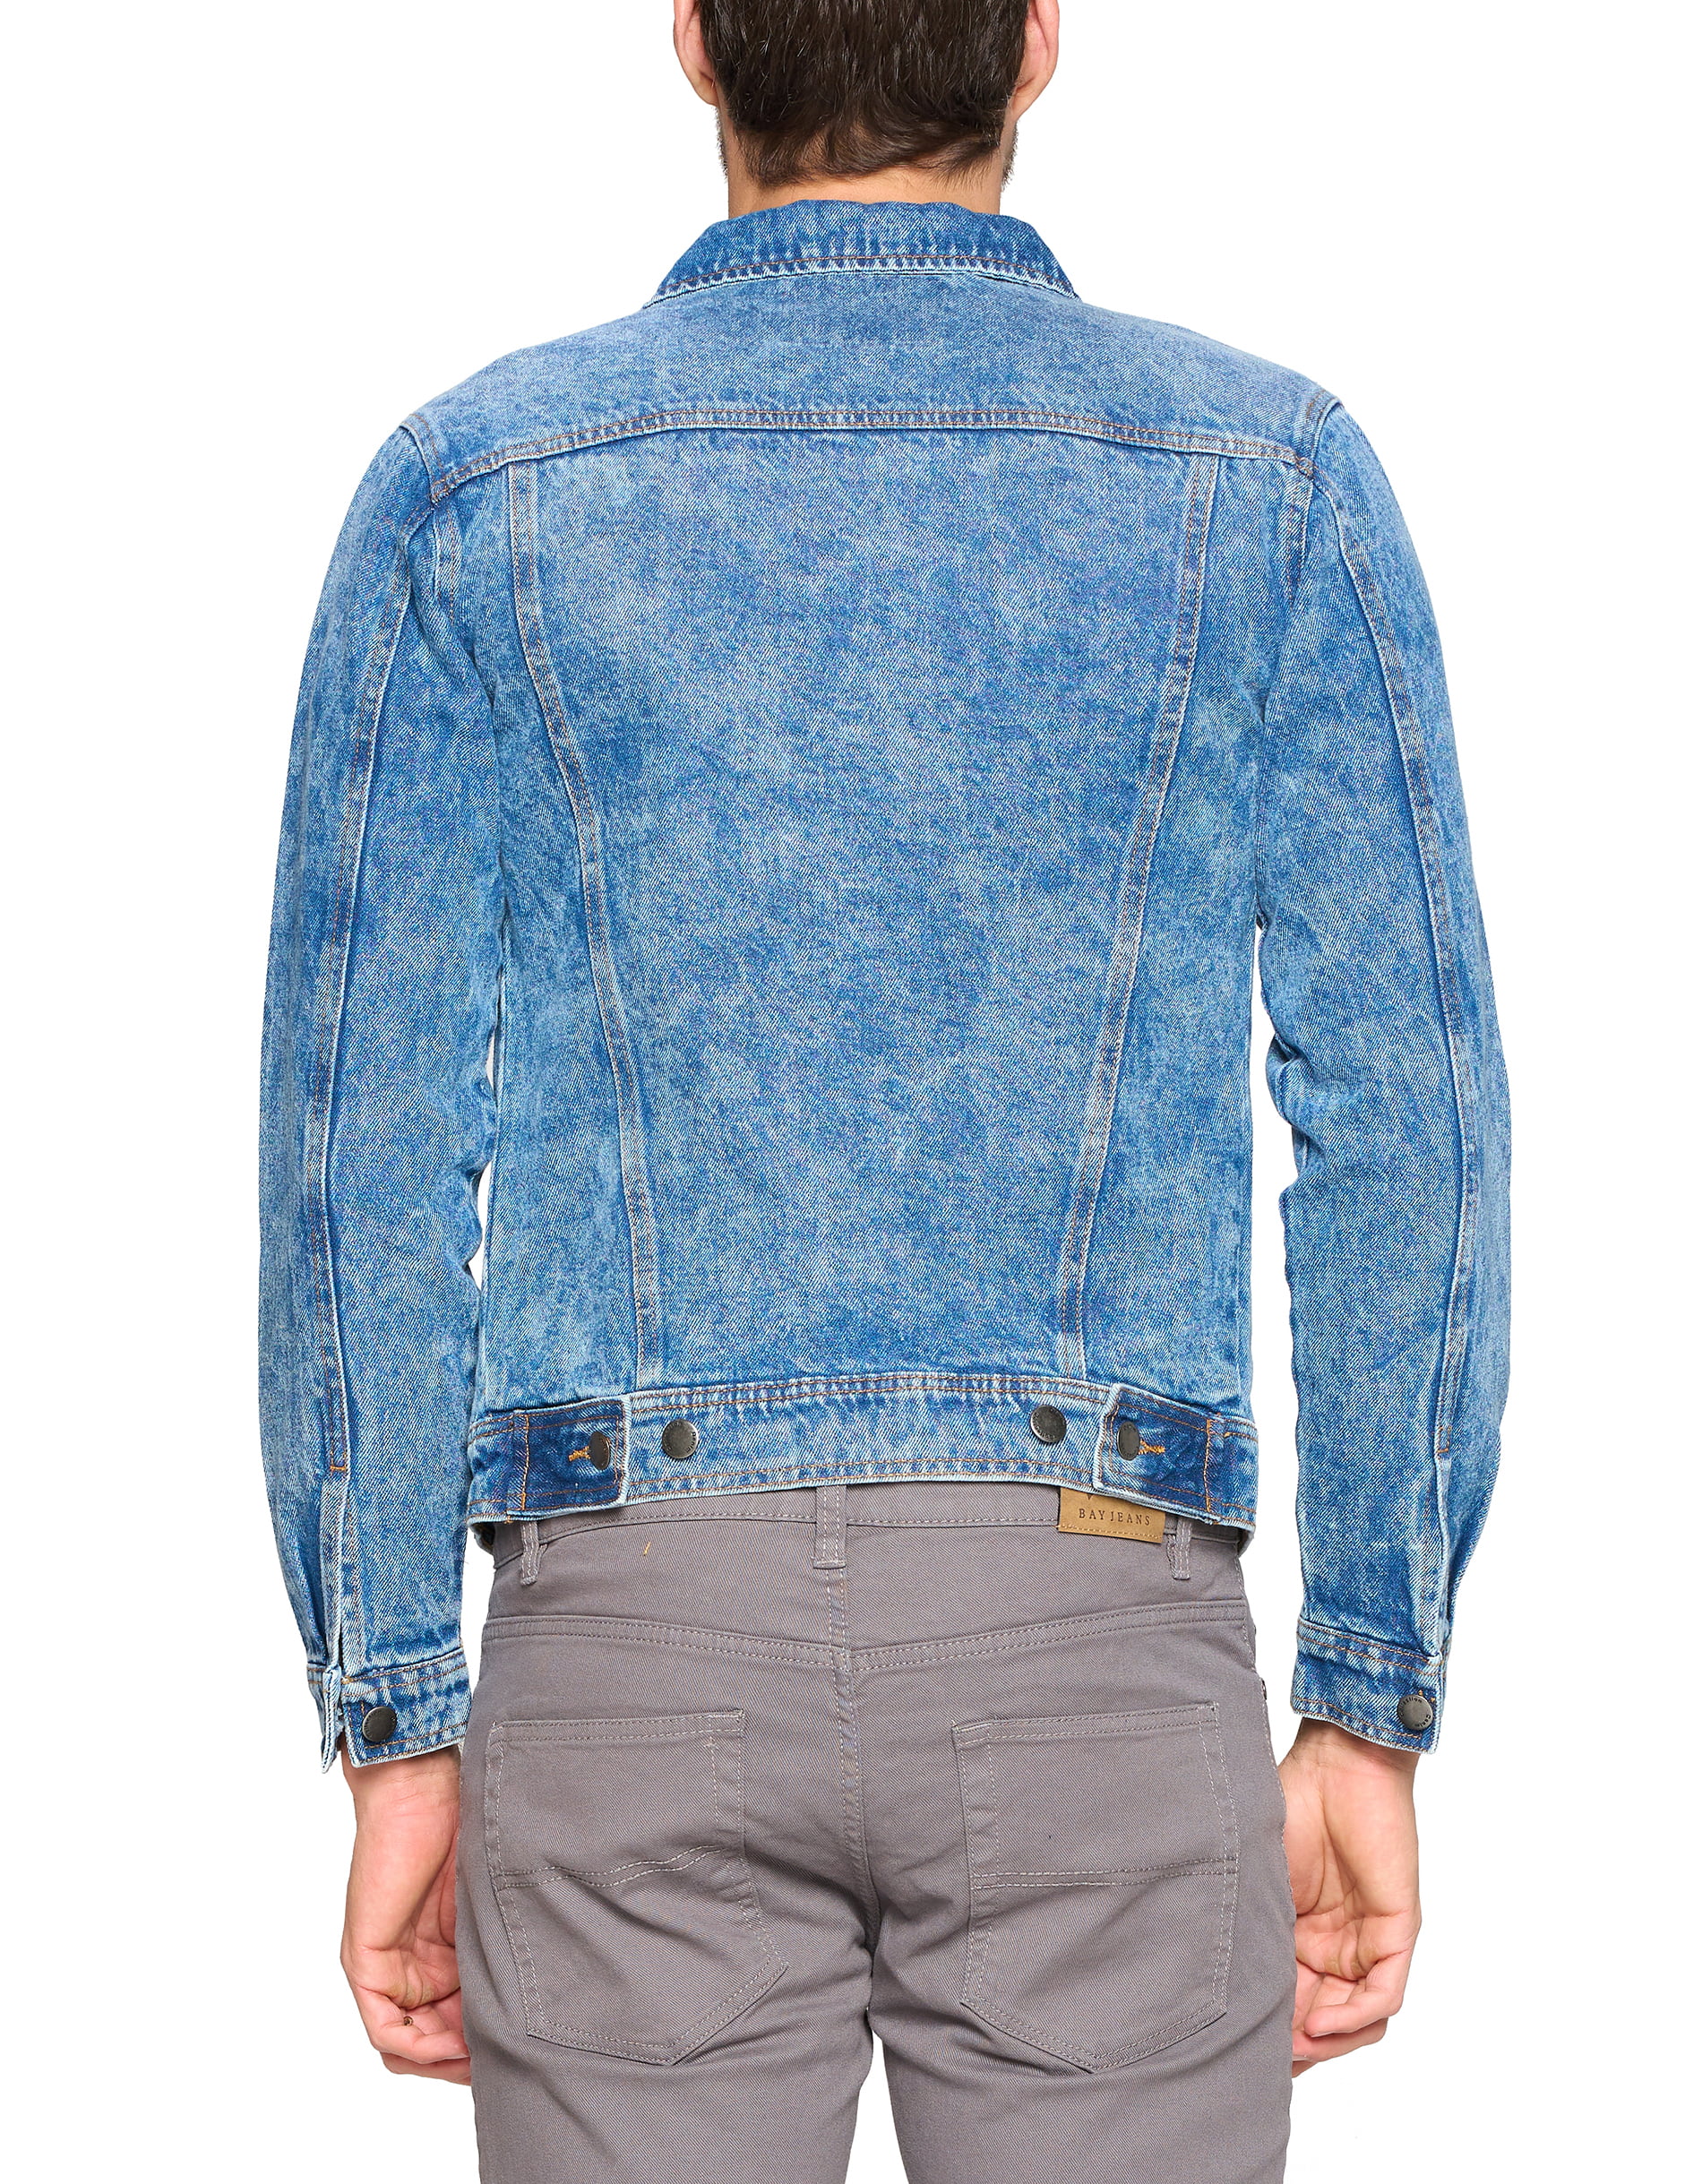 Red Label Men's Premium Casual Faded Denim Jean Button Up Cotton Slim Fit  Jacket (Mineral Black, S) 